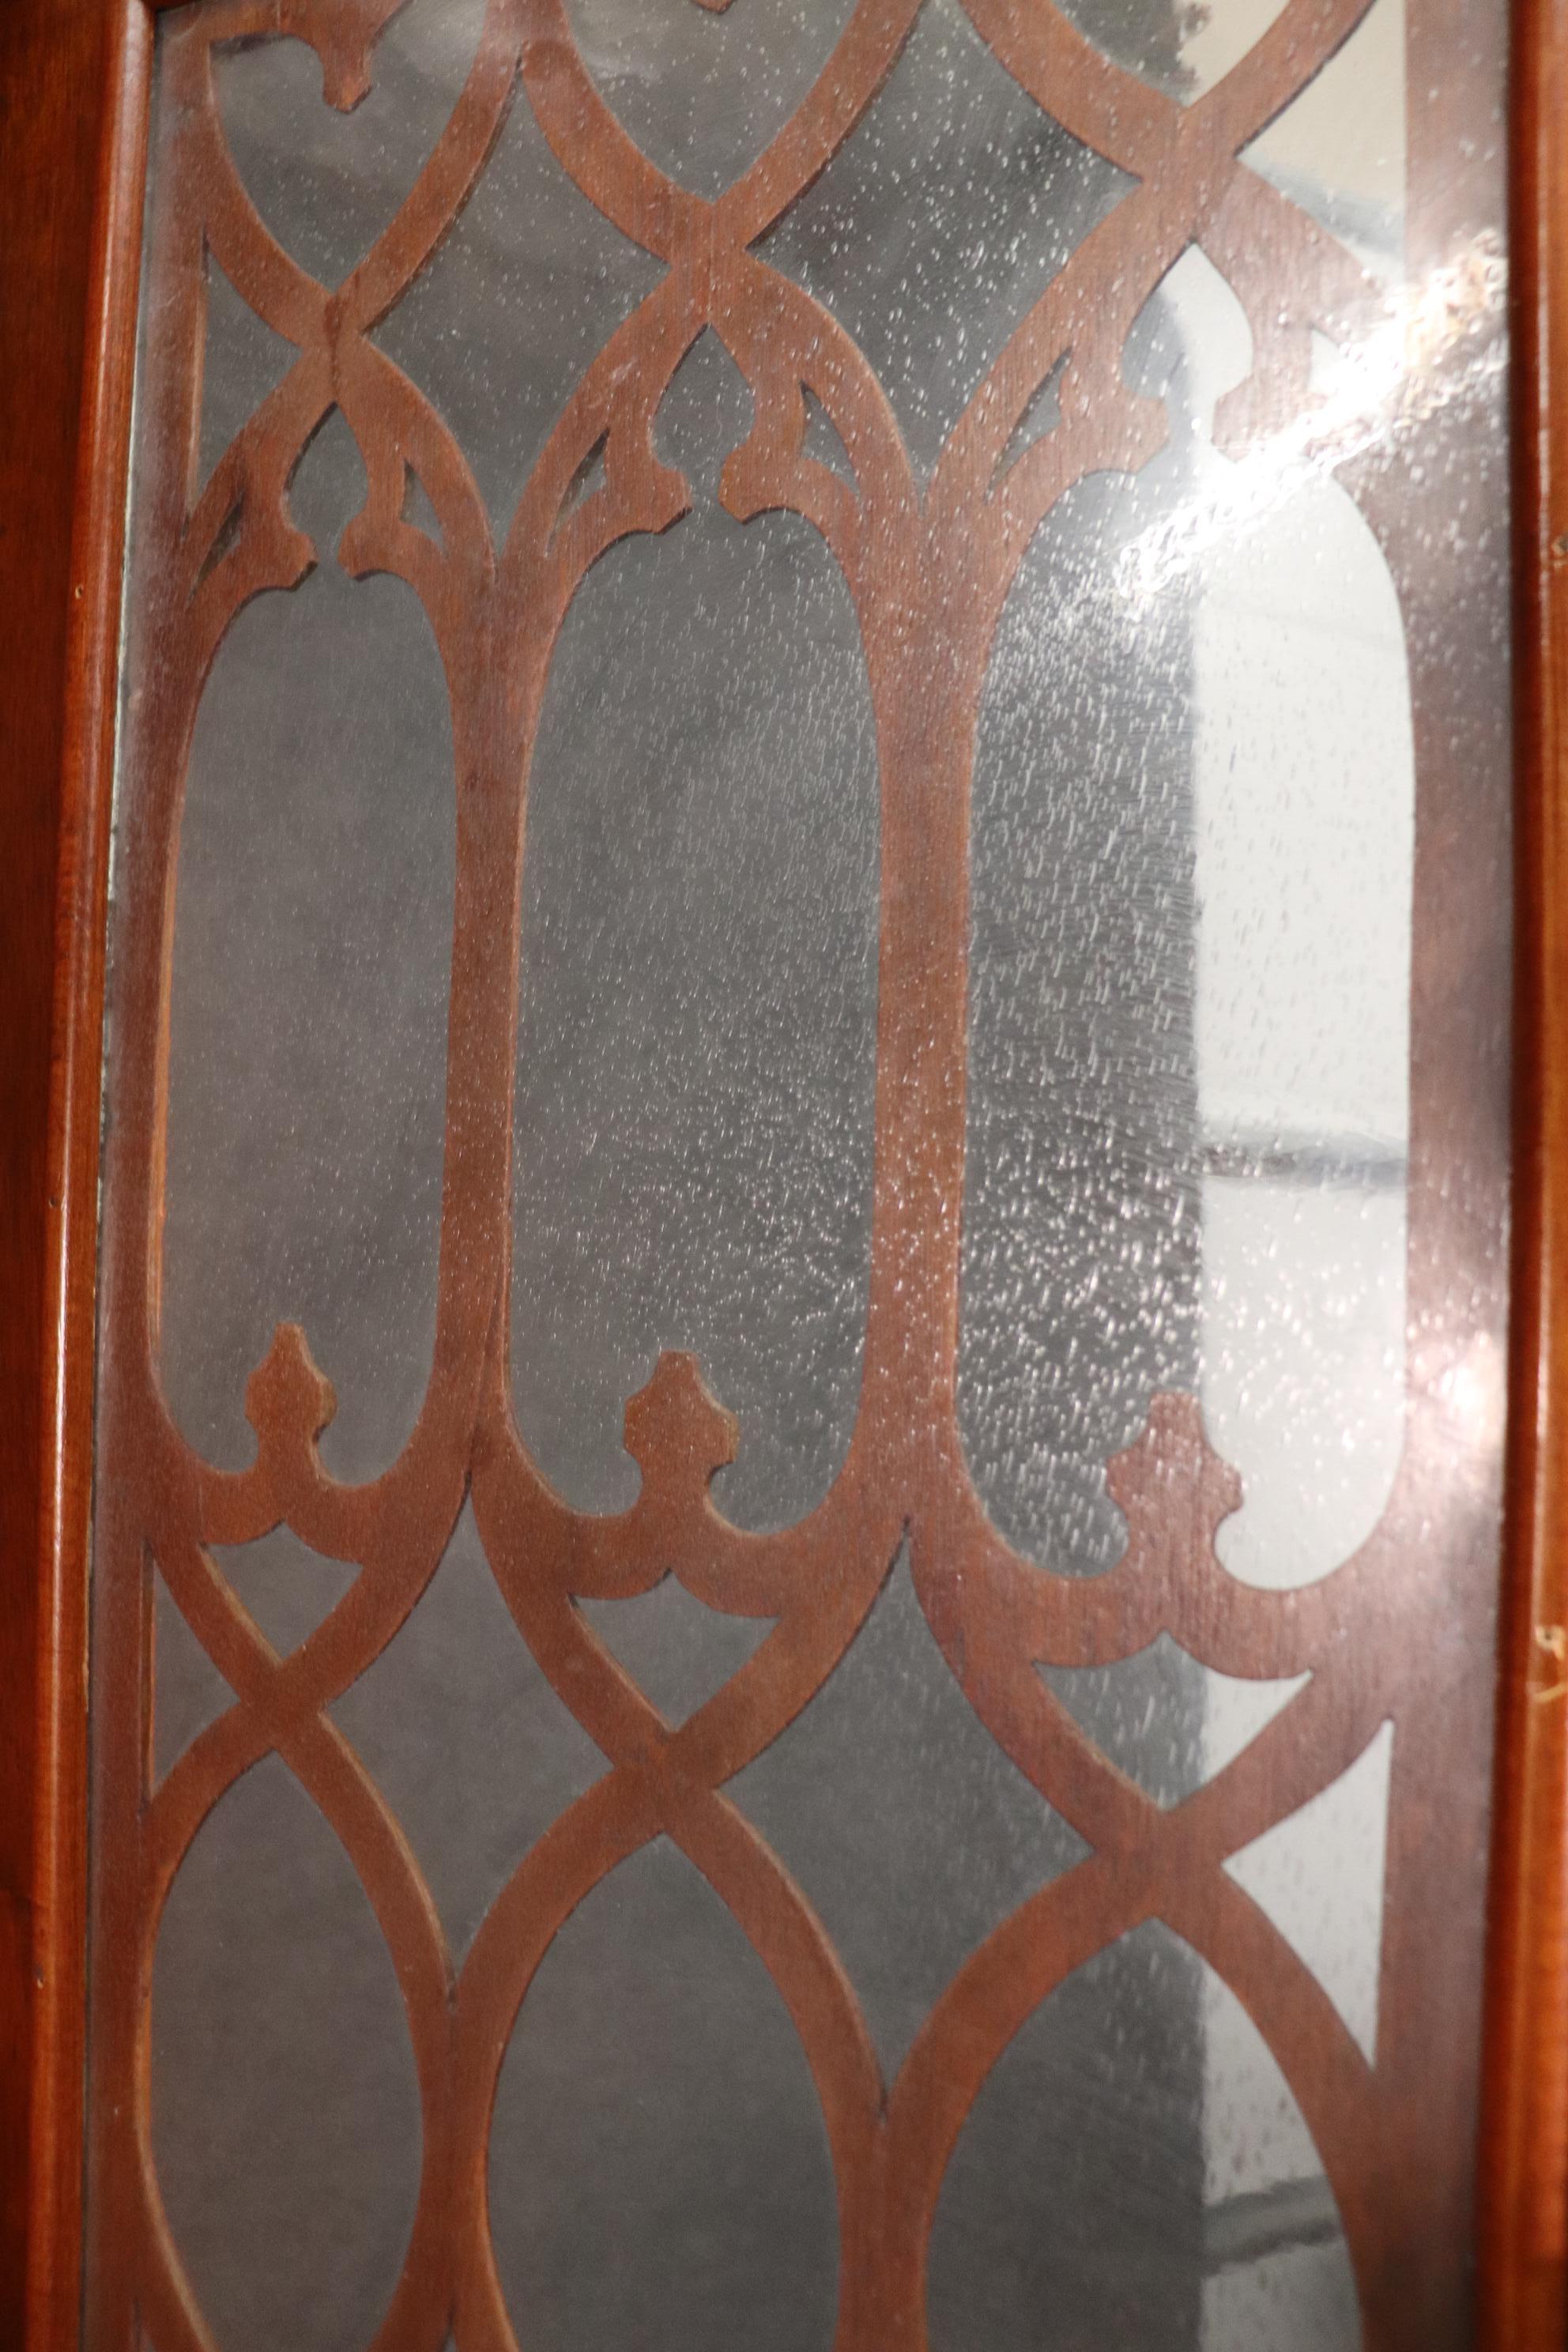 Walnut Late Victorian Gothic Secretary Desk Bookcase Seeded Glass Marble Top 1890s Era